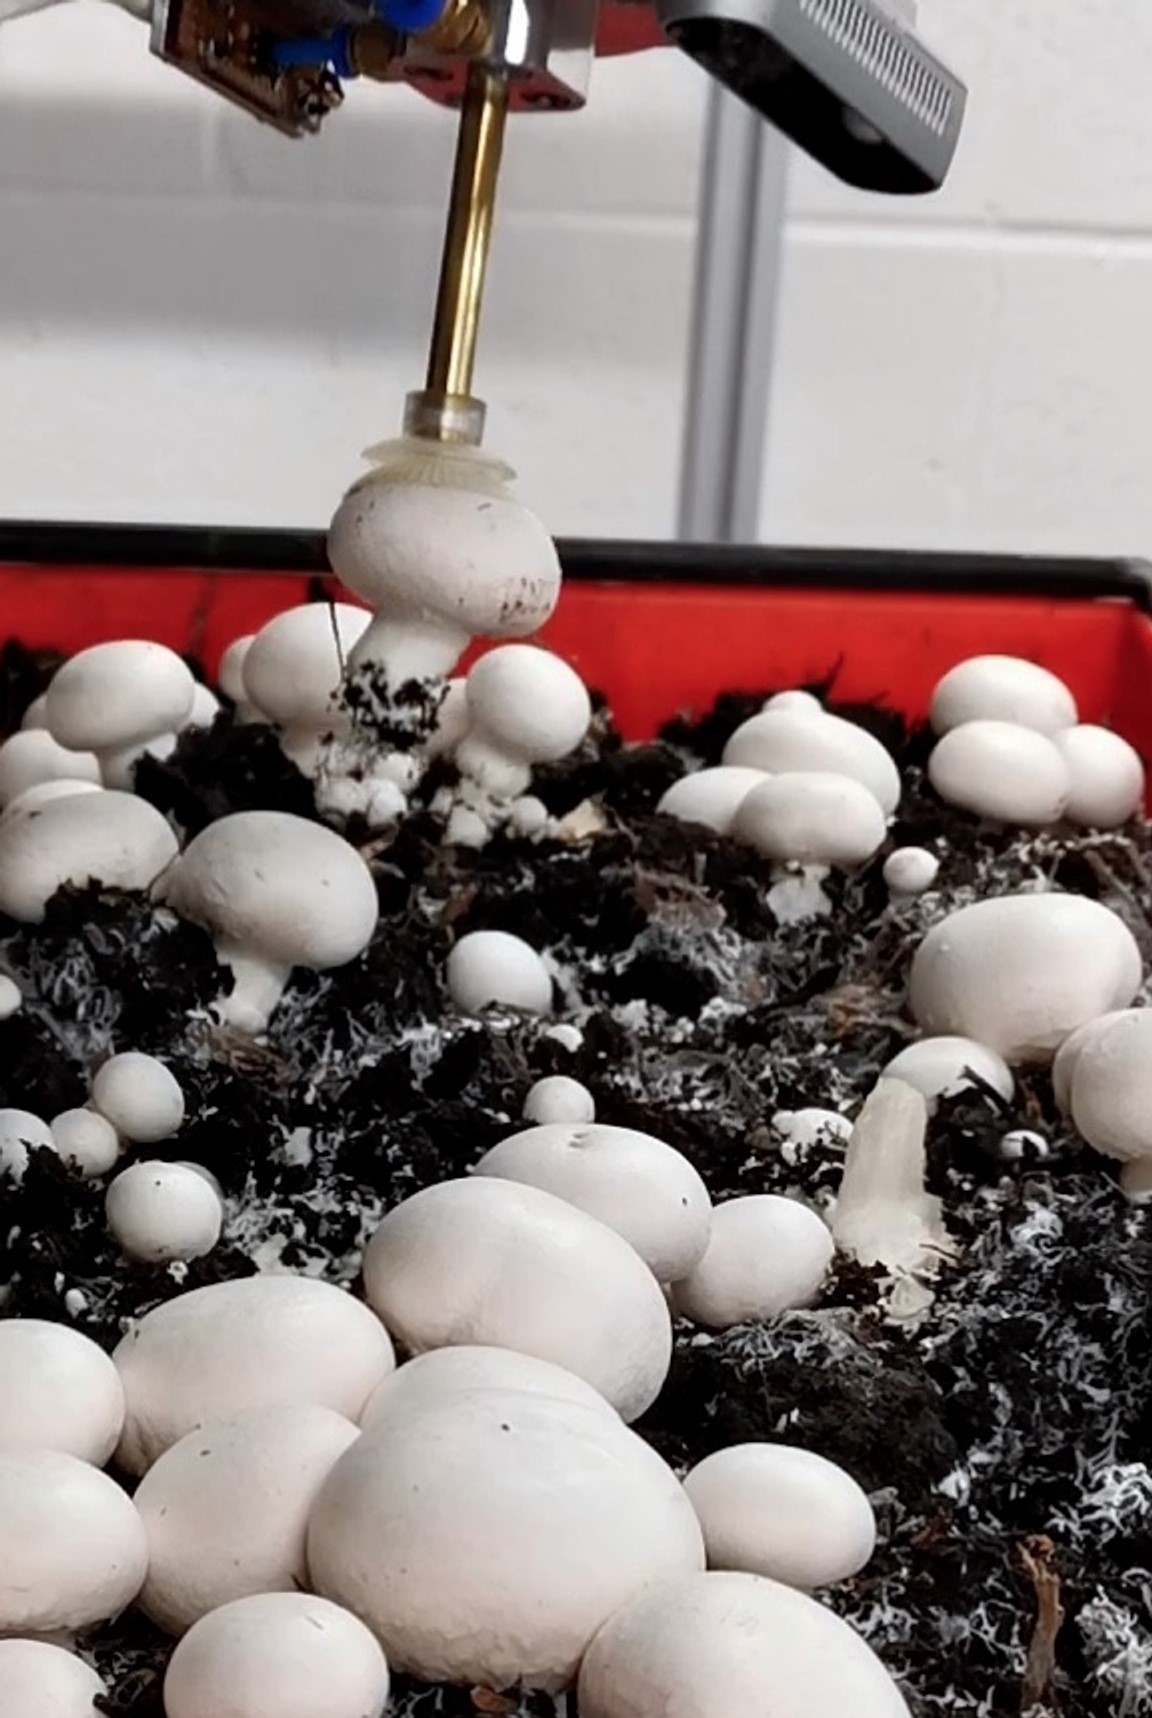 Mushroom harvesting robot is among innovations from new agri-tech partnership